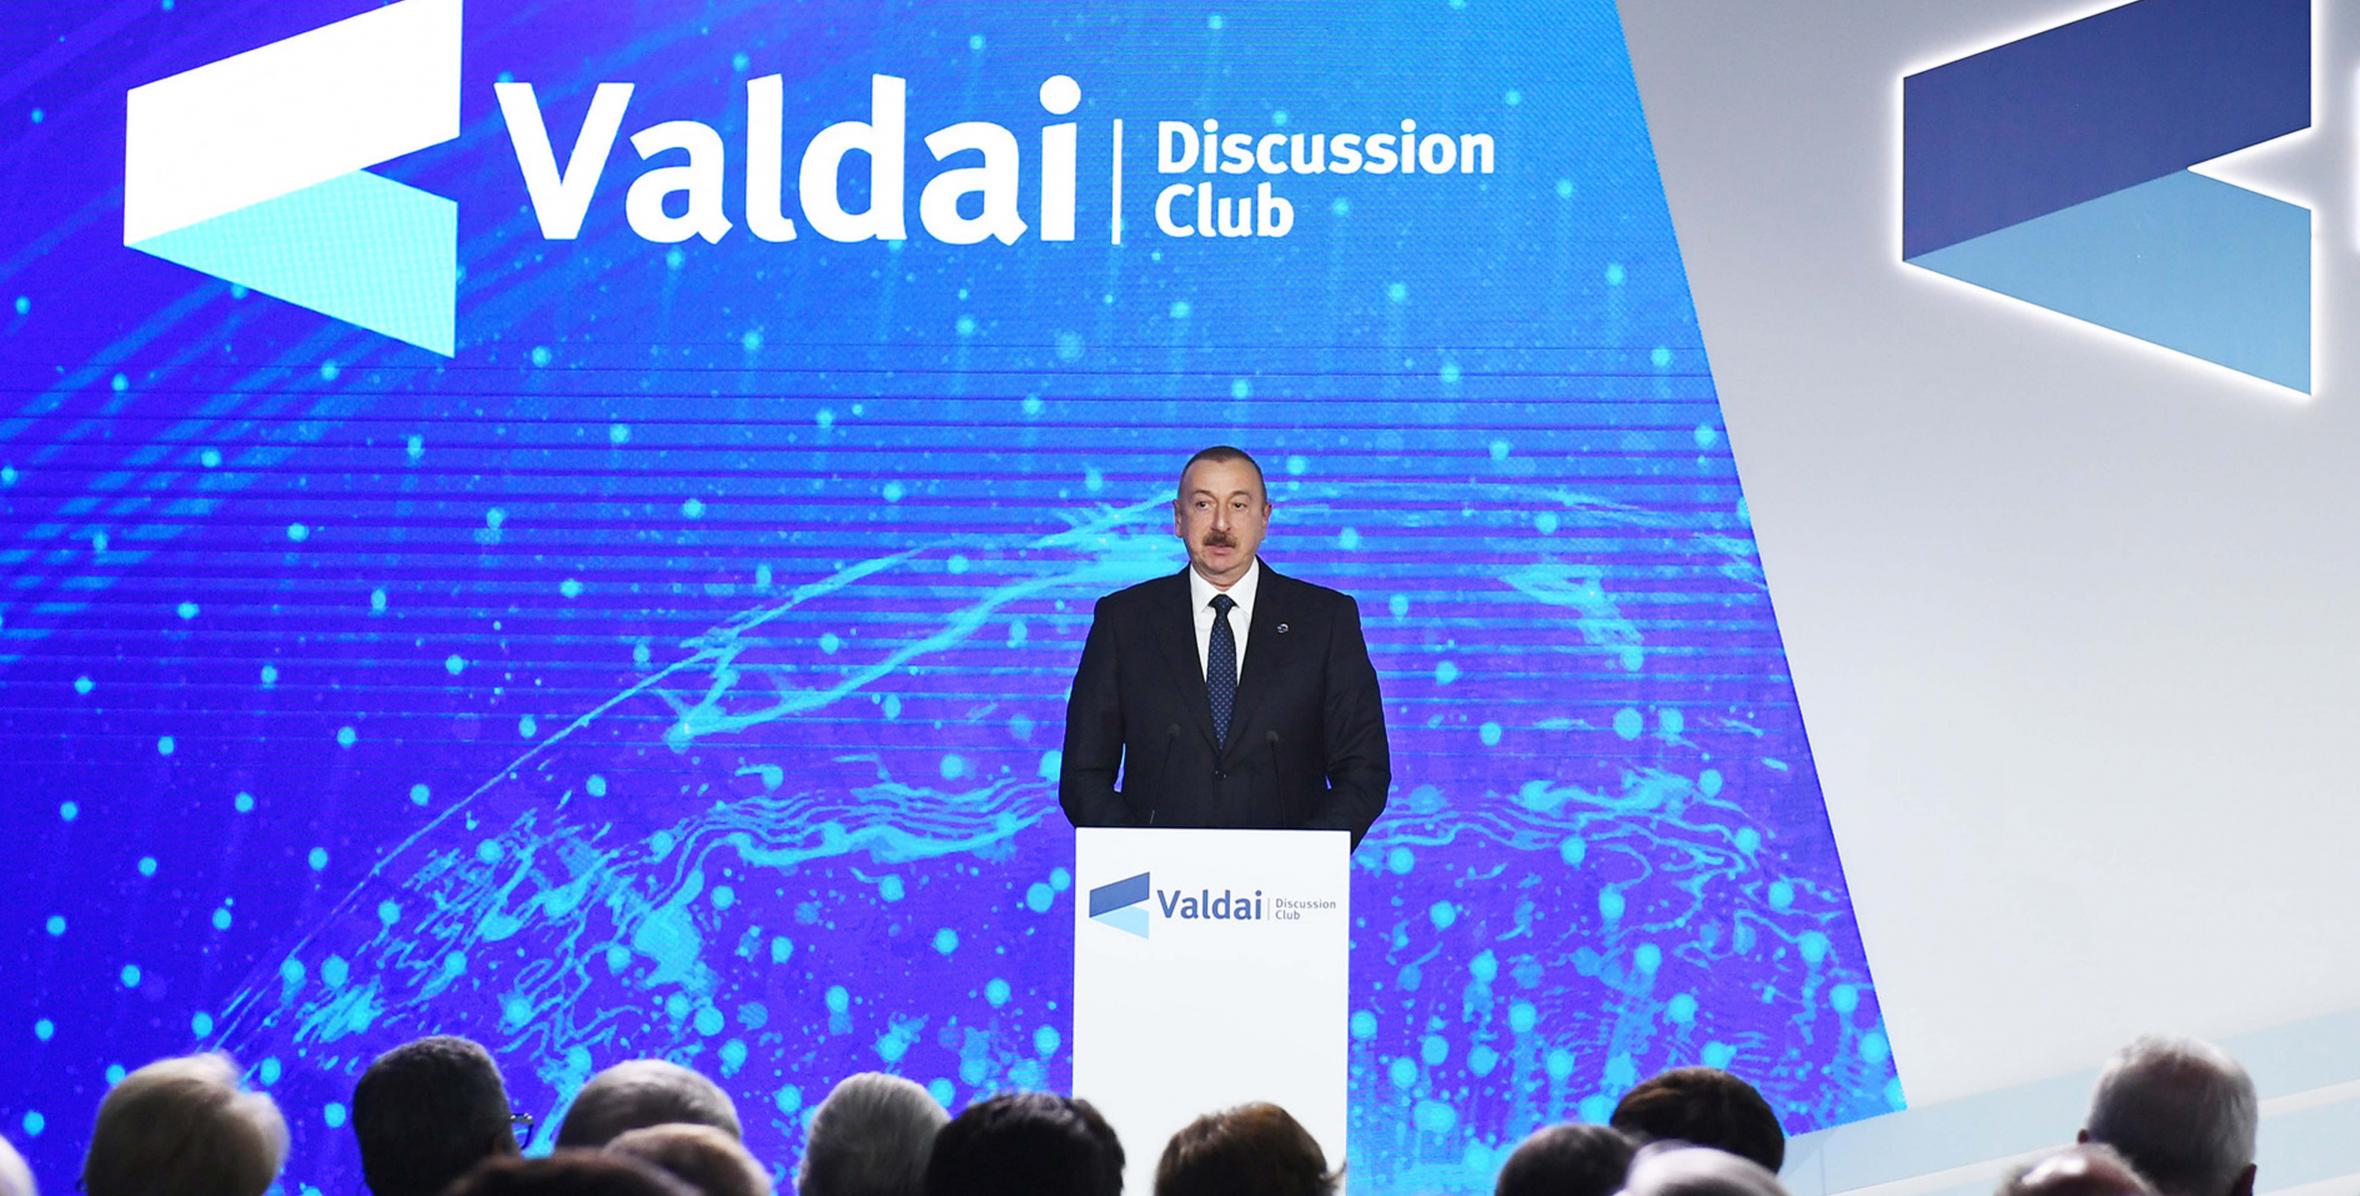 İlham Əliyevin “Valday” forumunda dediyi kimi ile ilgili görsel sonucu